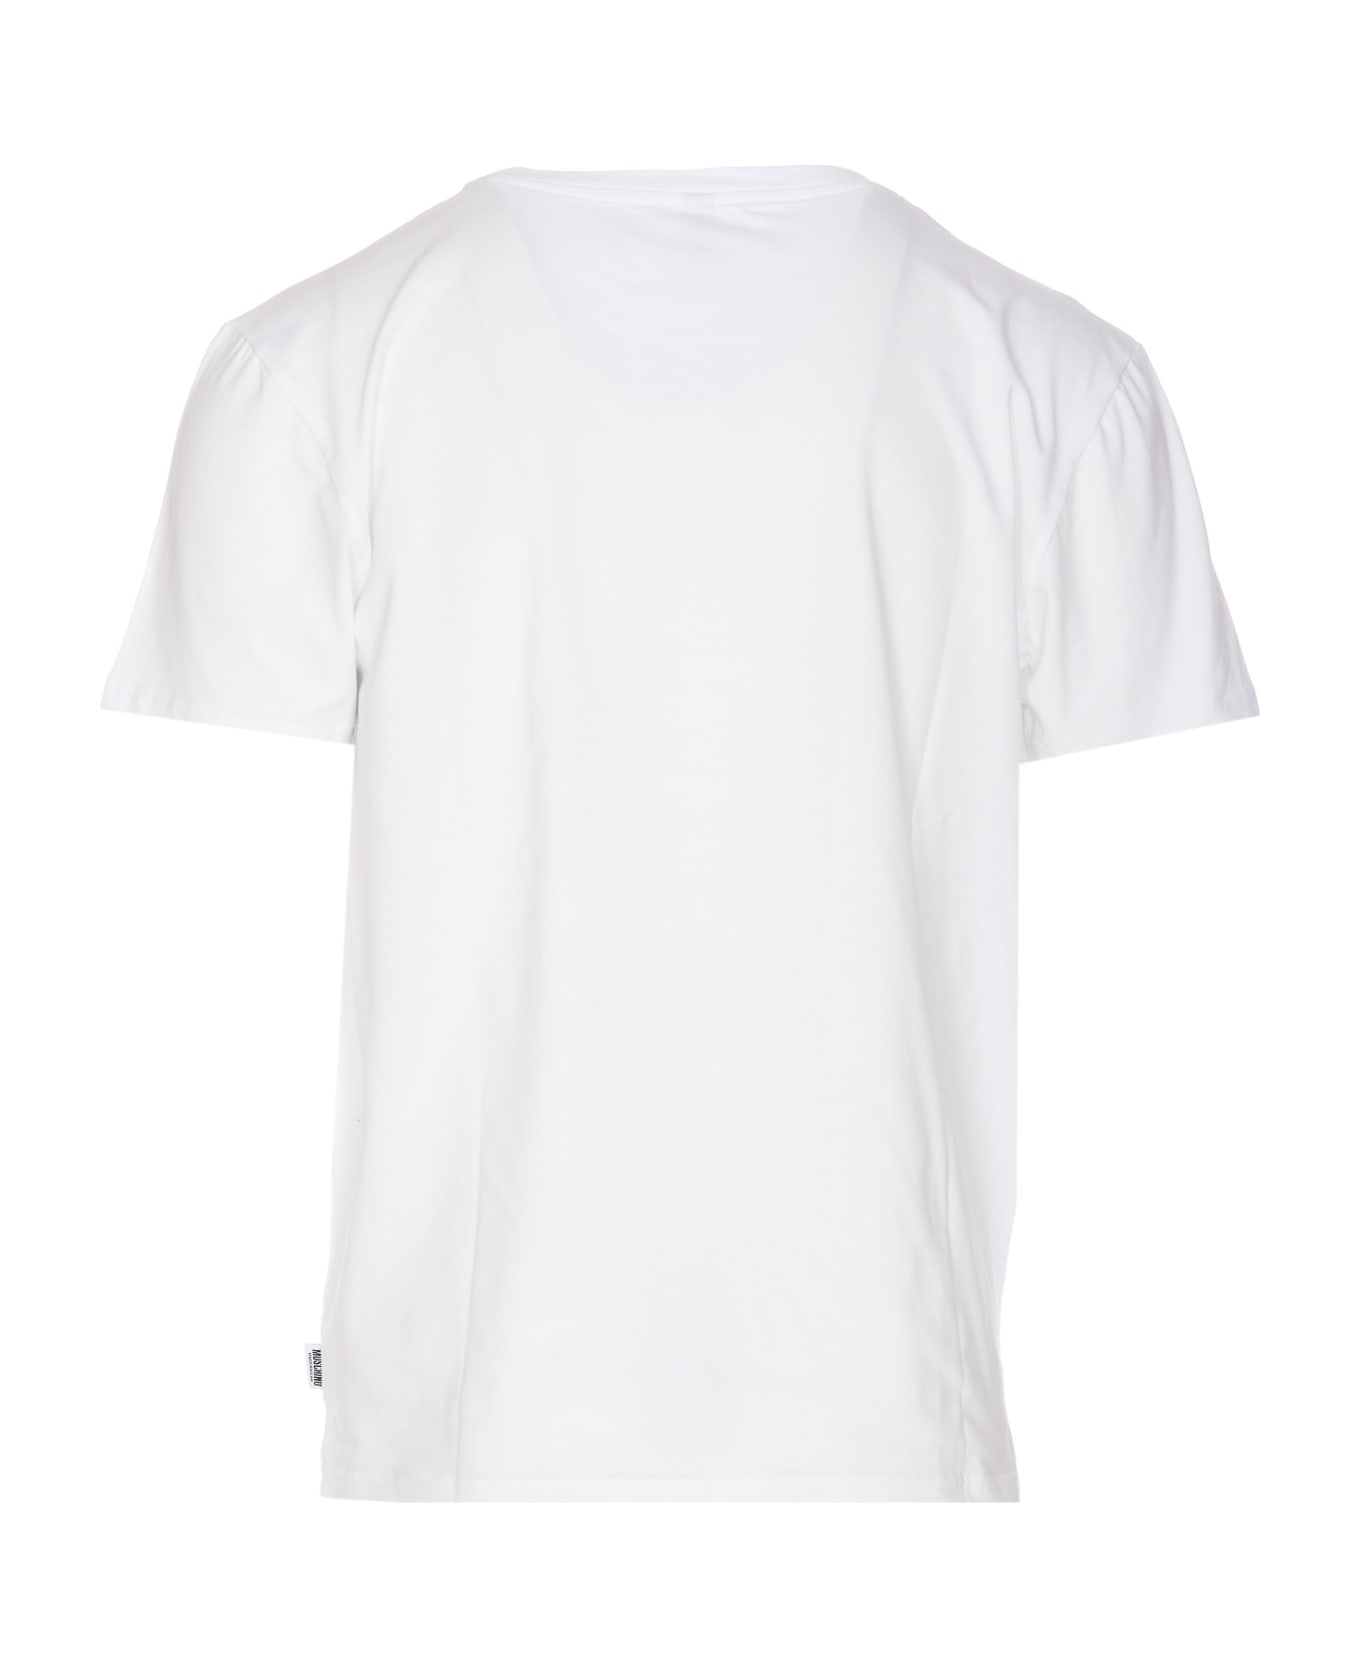 Moschino T-shirt Logo Underbear - White Tシャツ